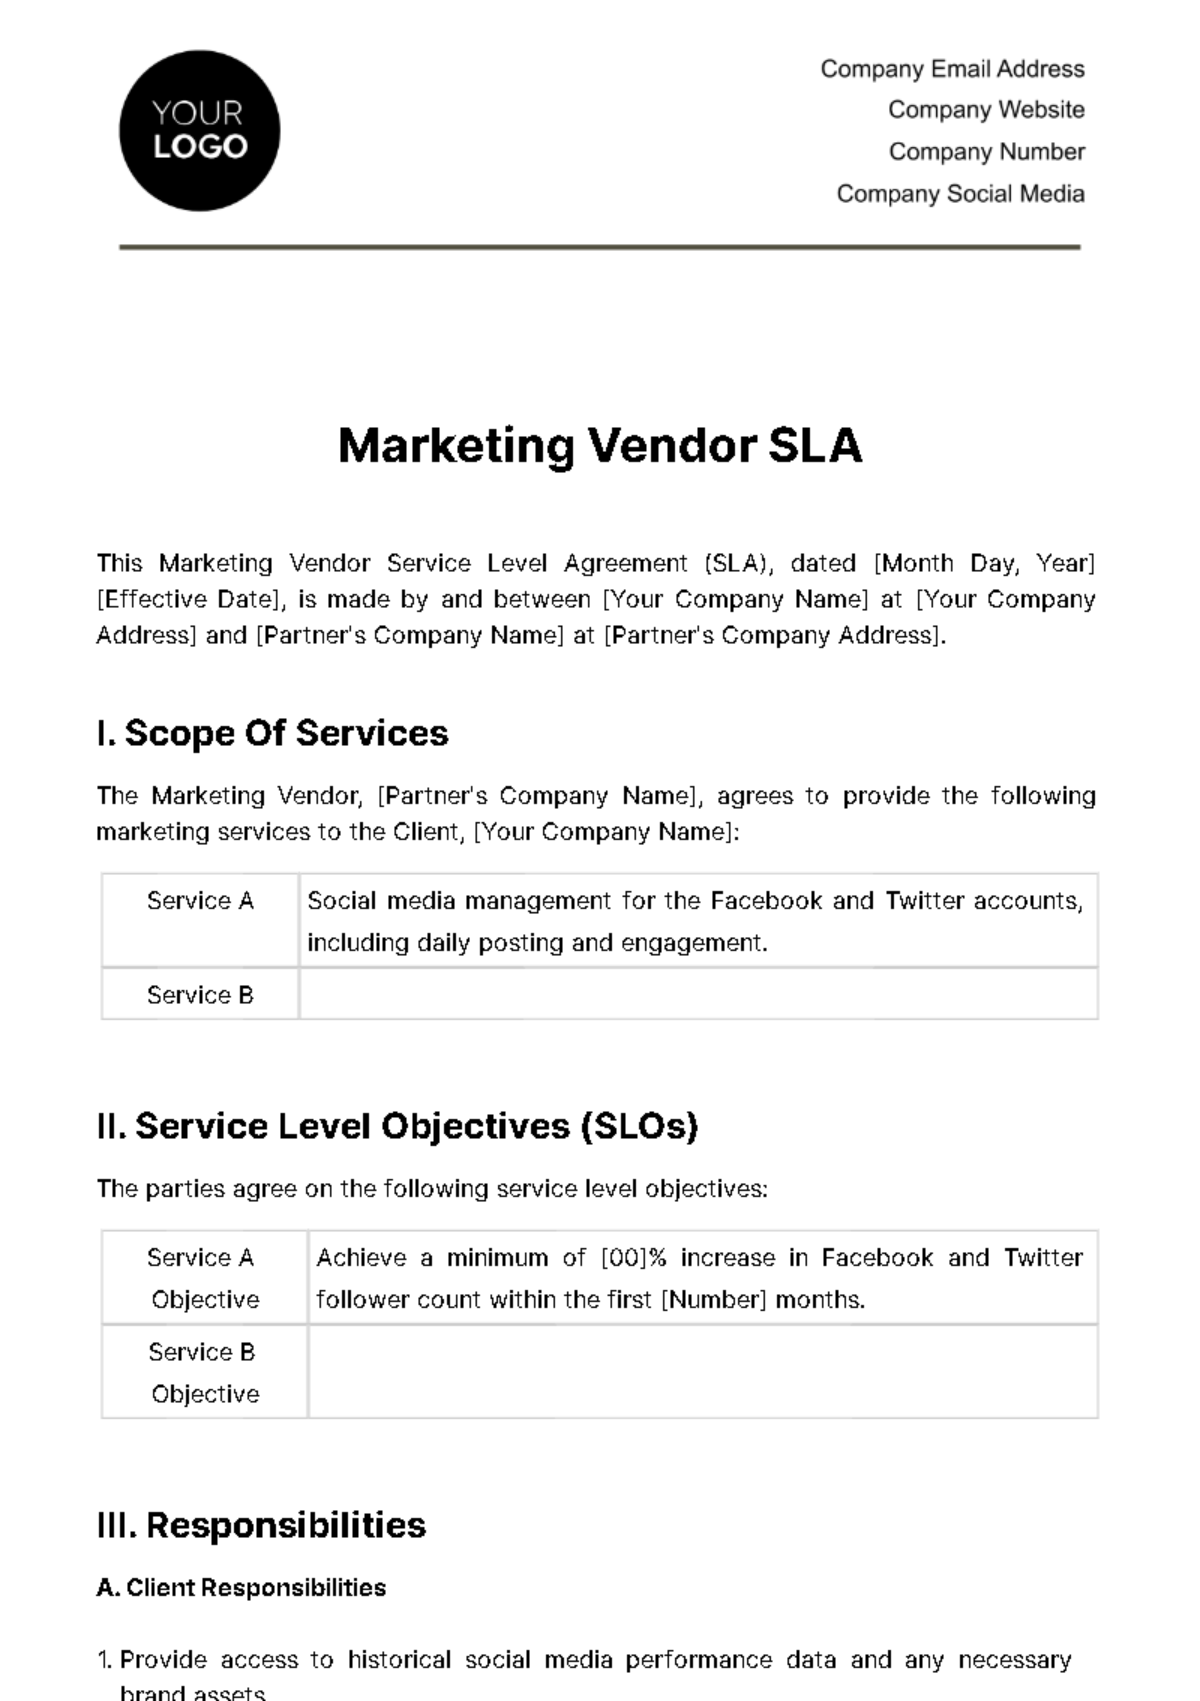 Marketing Vendor SLA Template